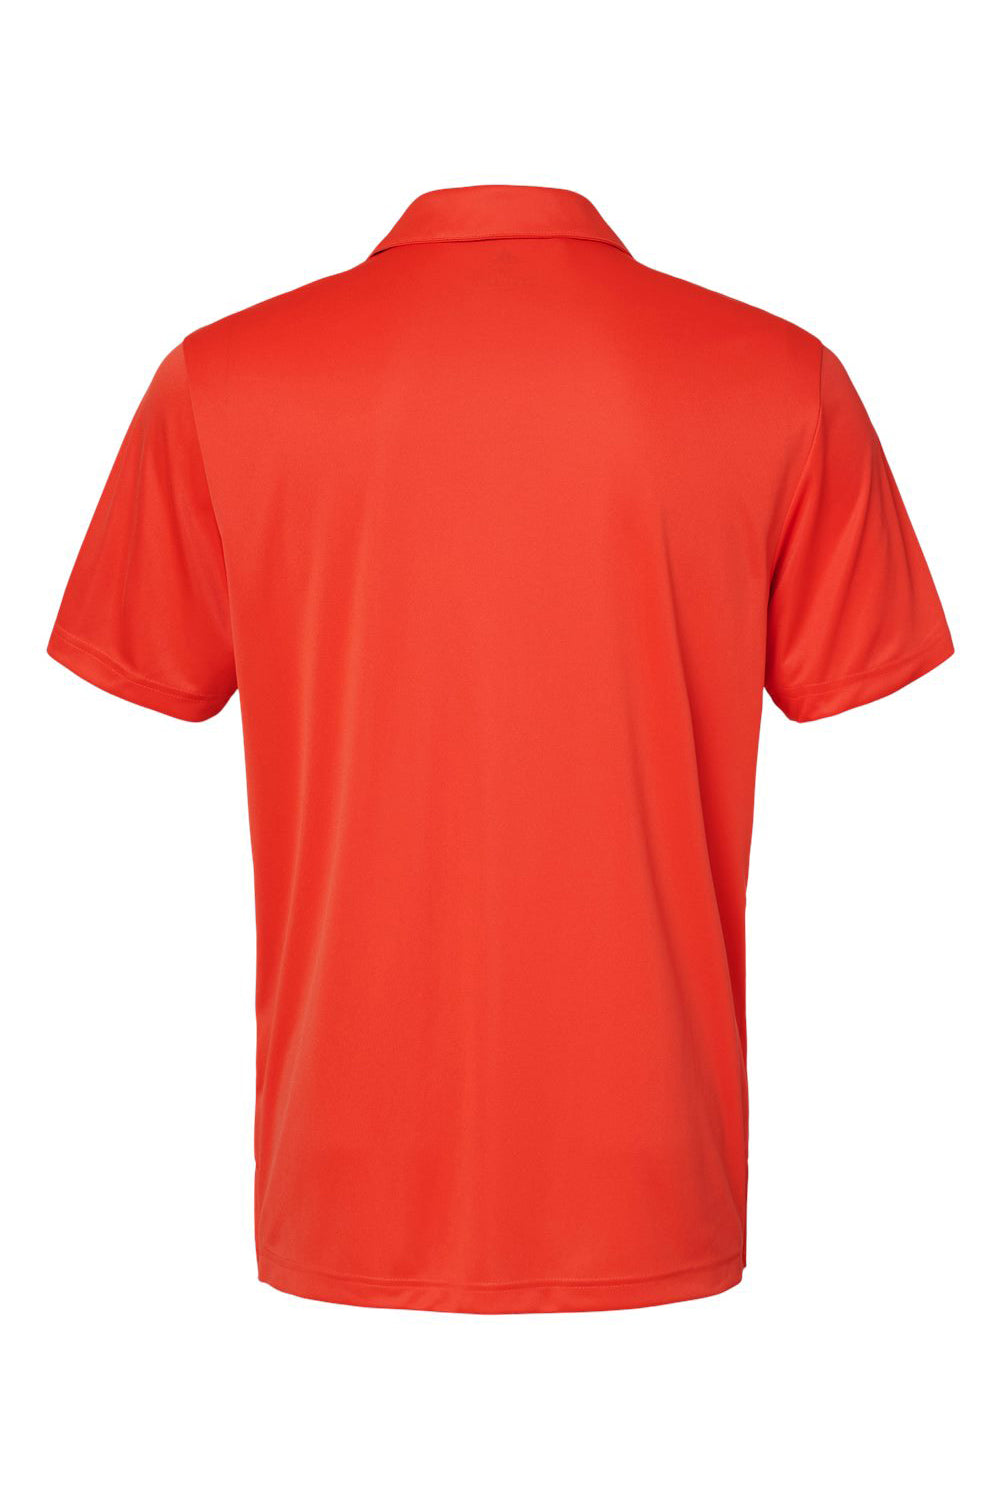 Adidas A324 Mens 3 Stripes Short Sleeve Polo Shirt Blaze Orange/Black Flat Back